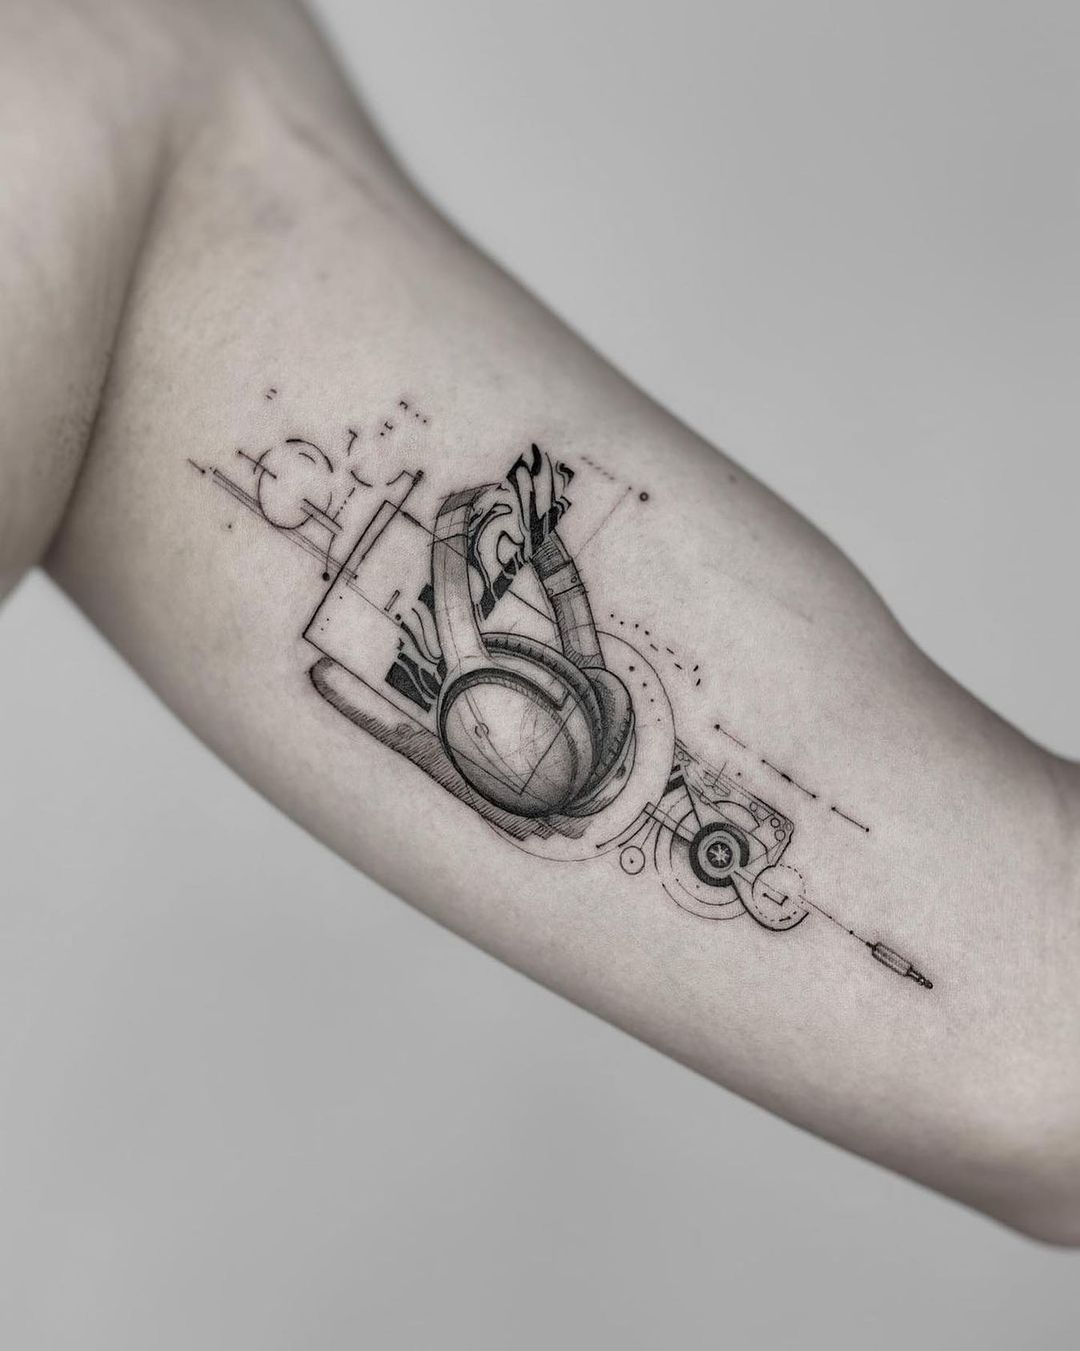 Cute music tattoo design by johny bozoki